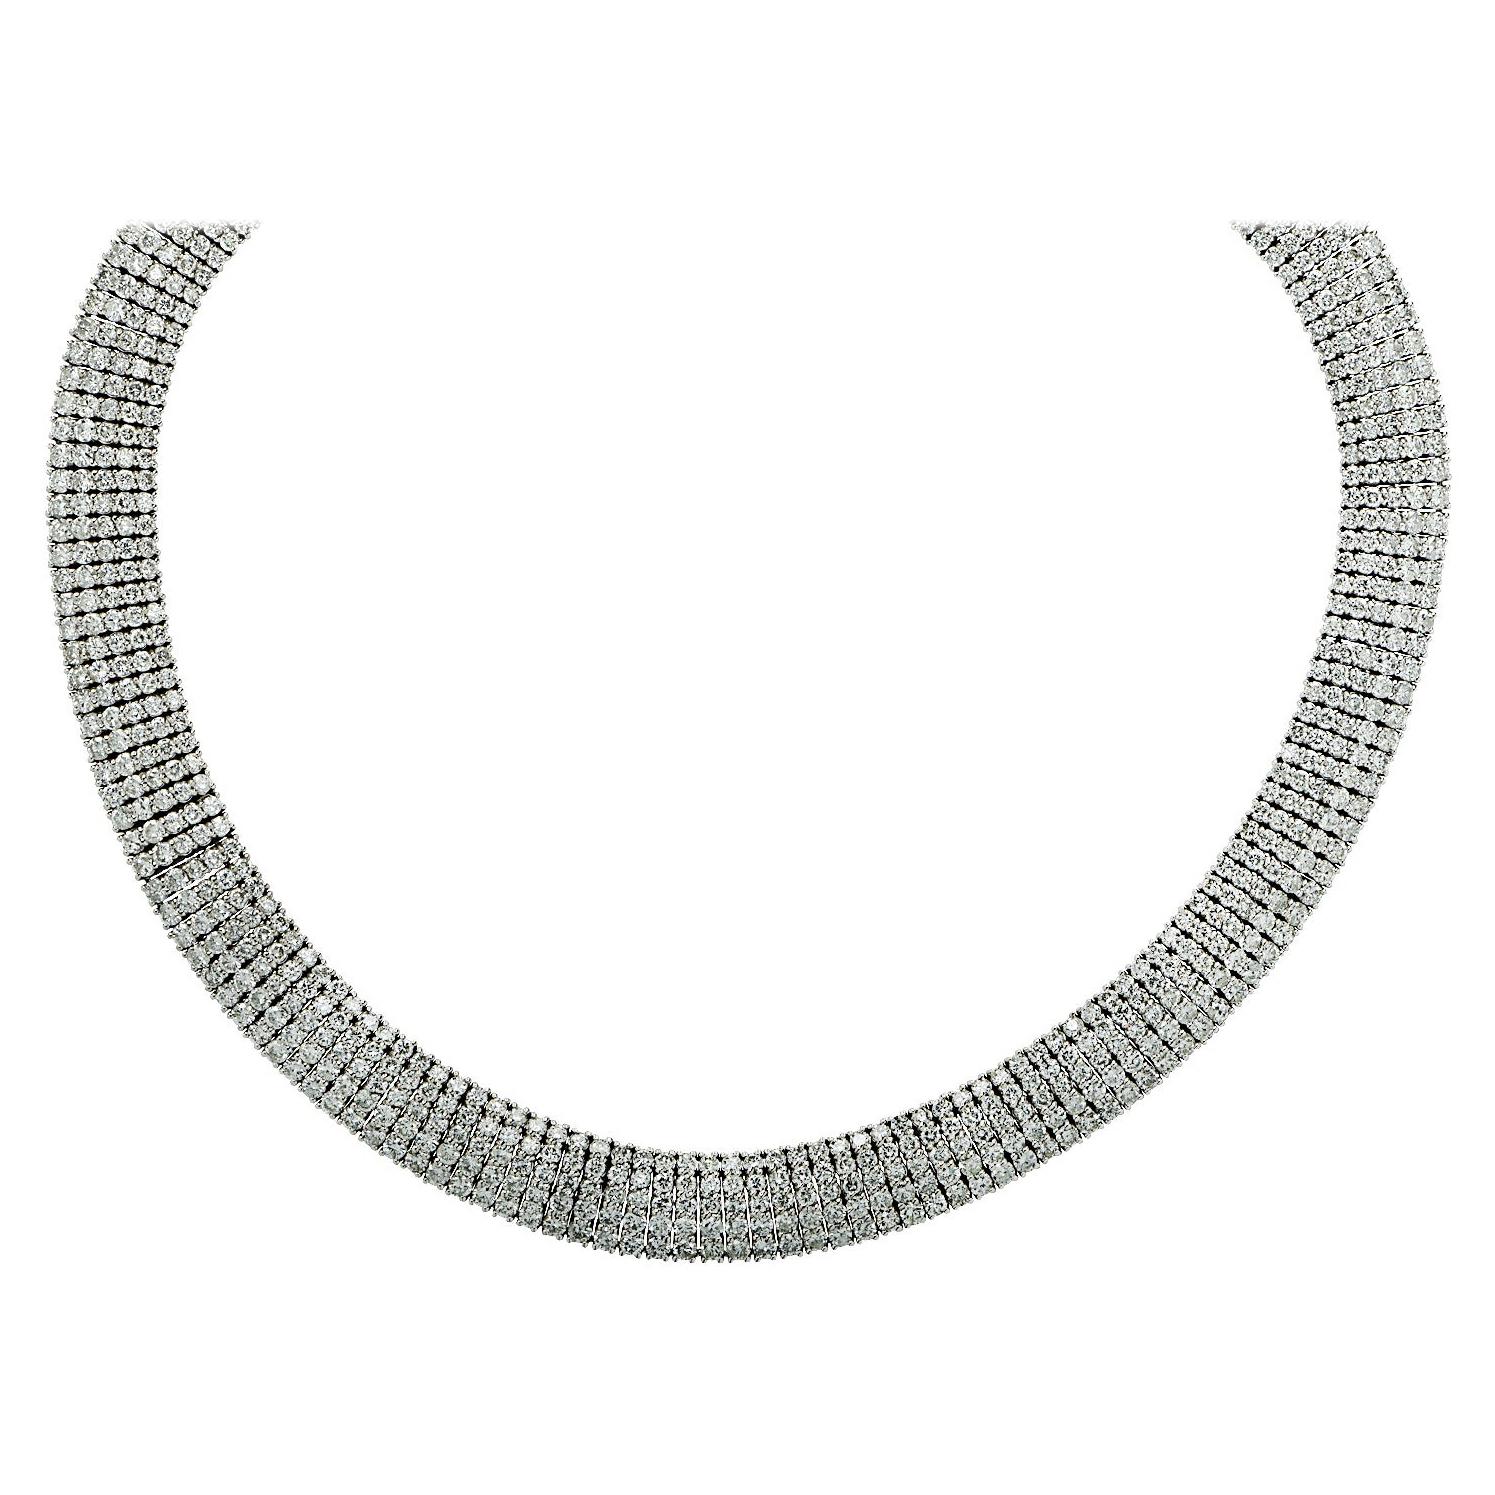 34 Carat Diamond Choker Necklace